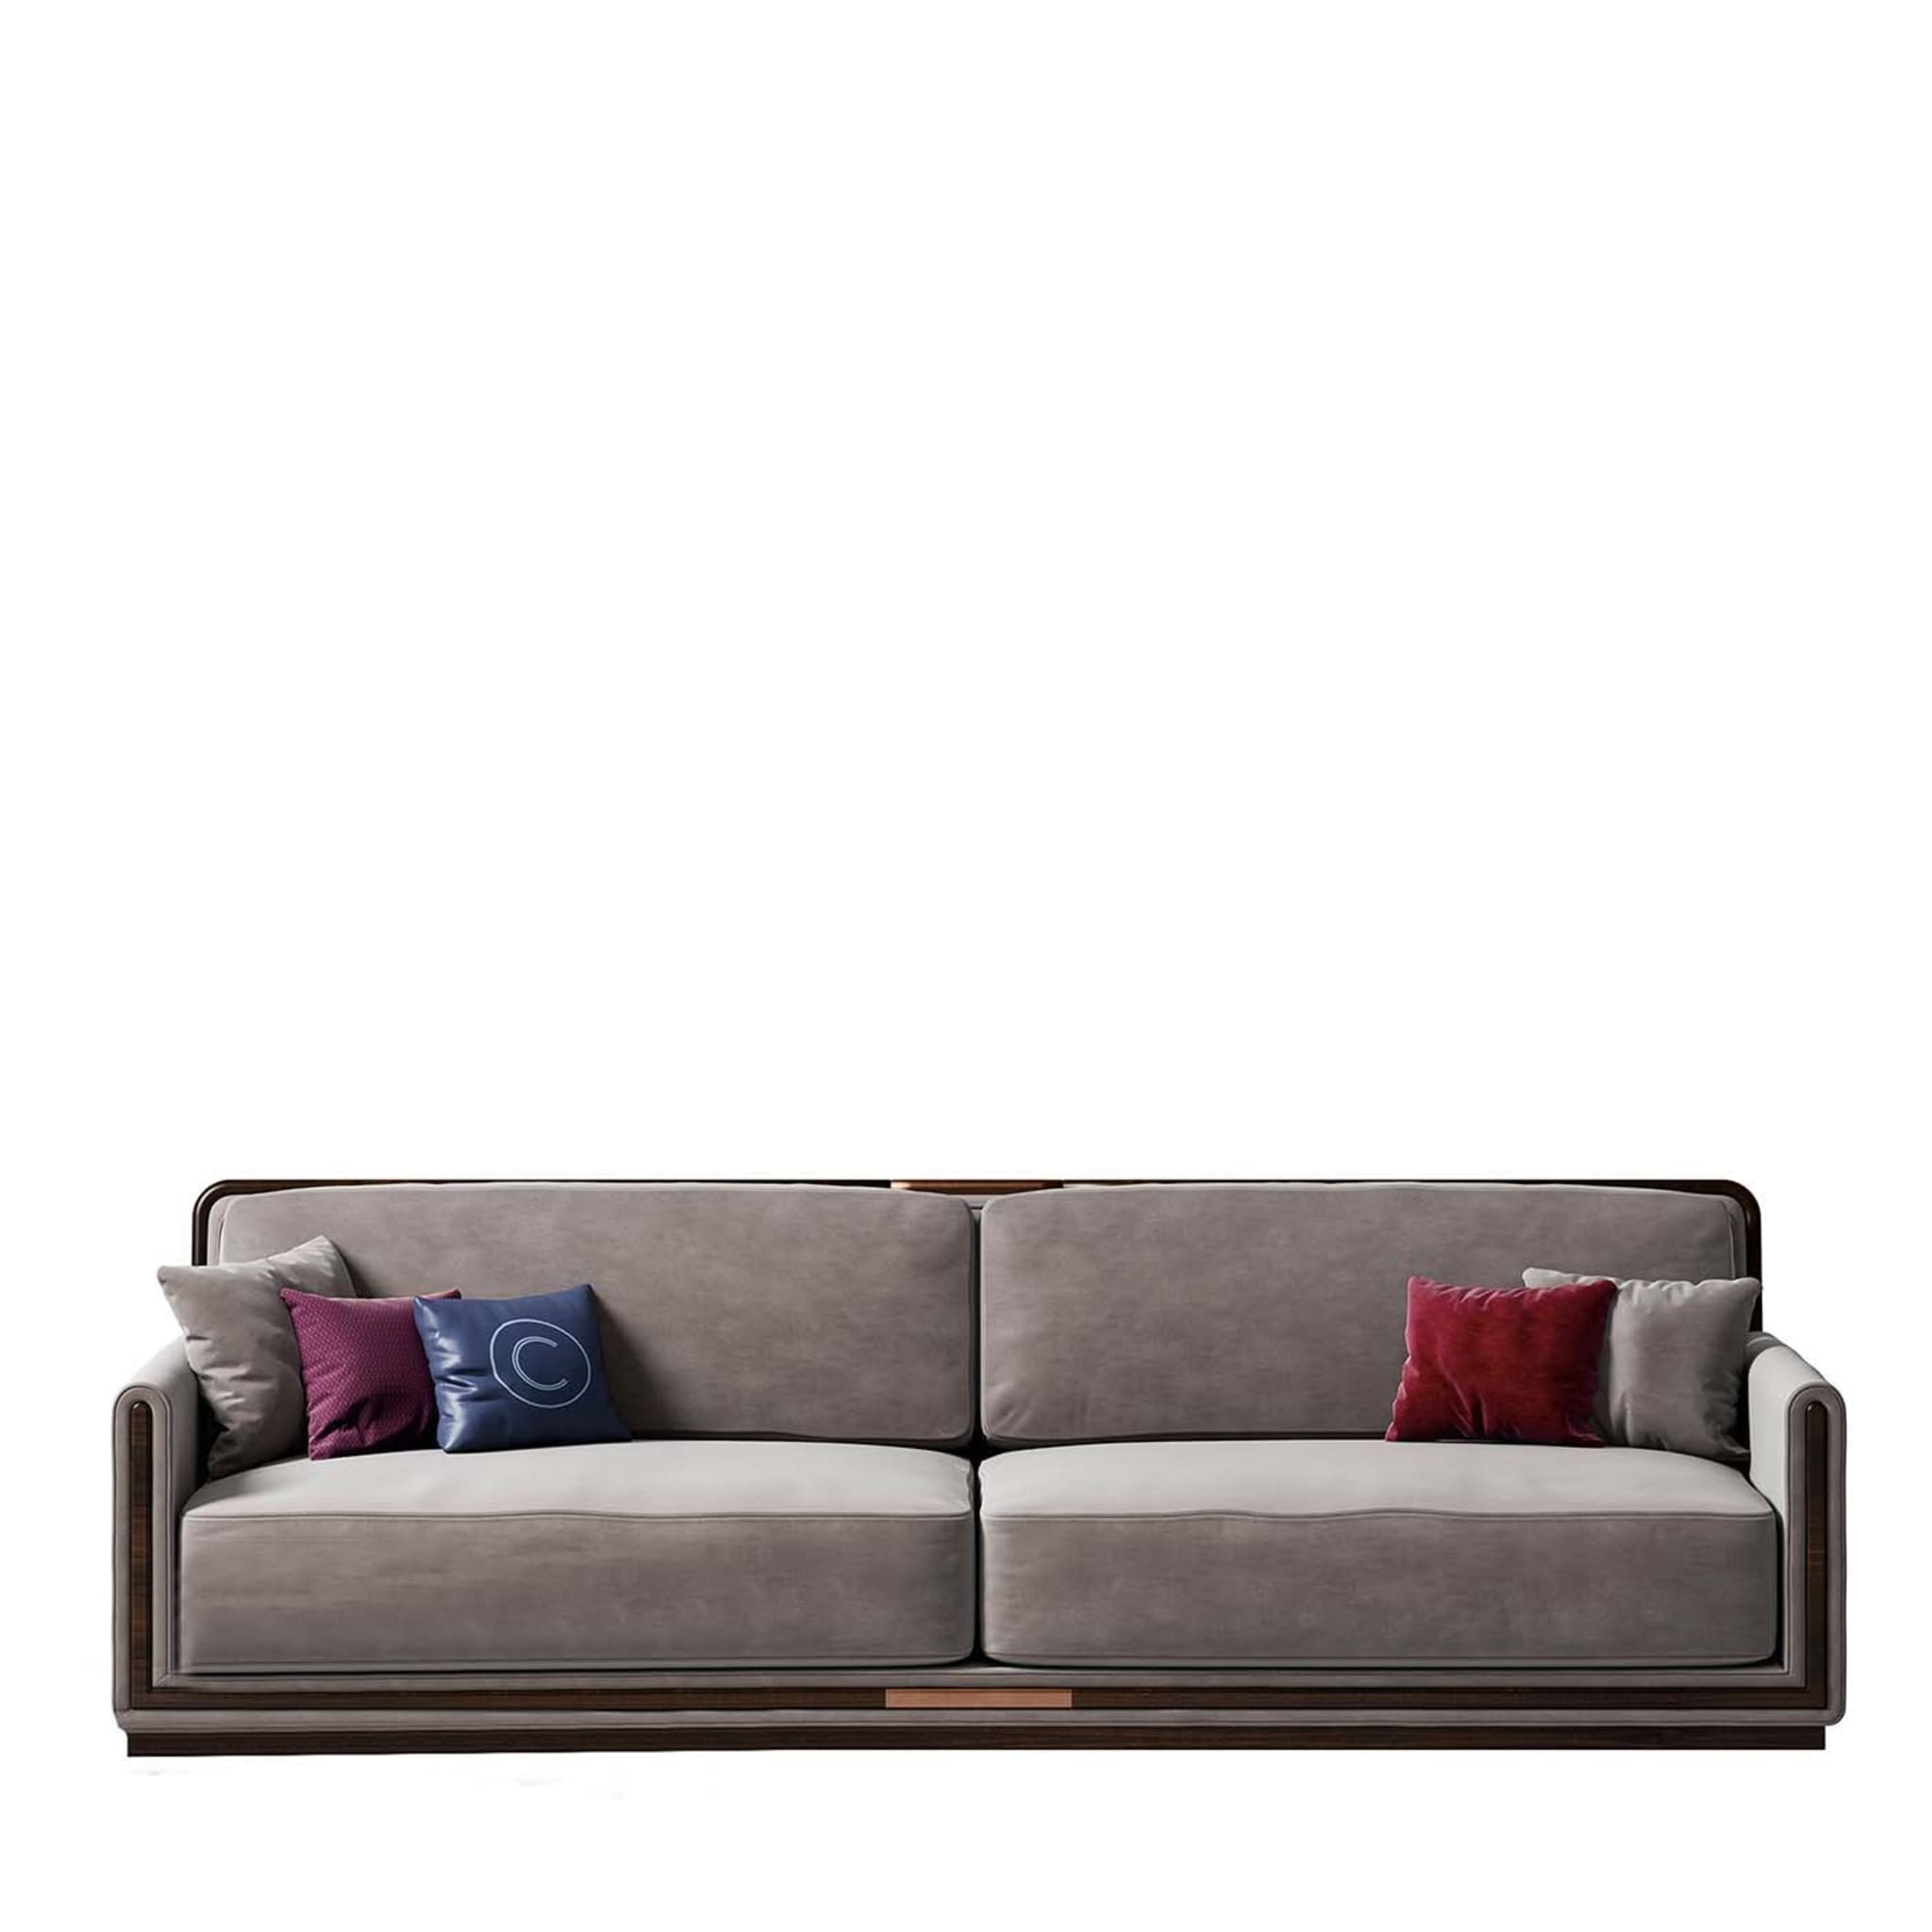 Graues Leder 3-Sitzer Sofa - Hauptansicht